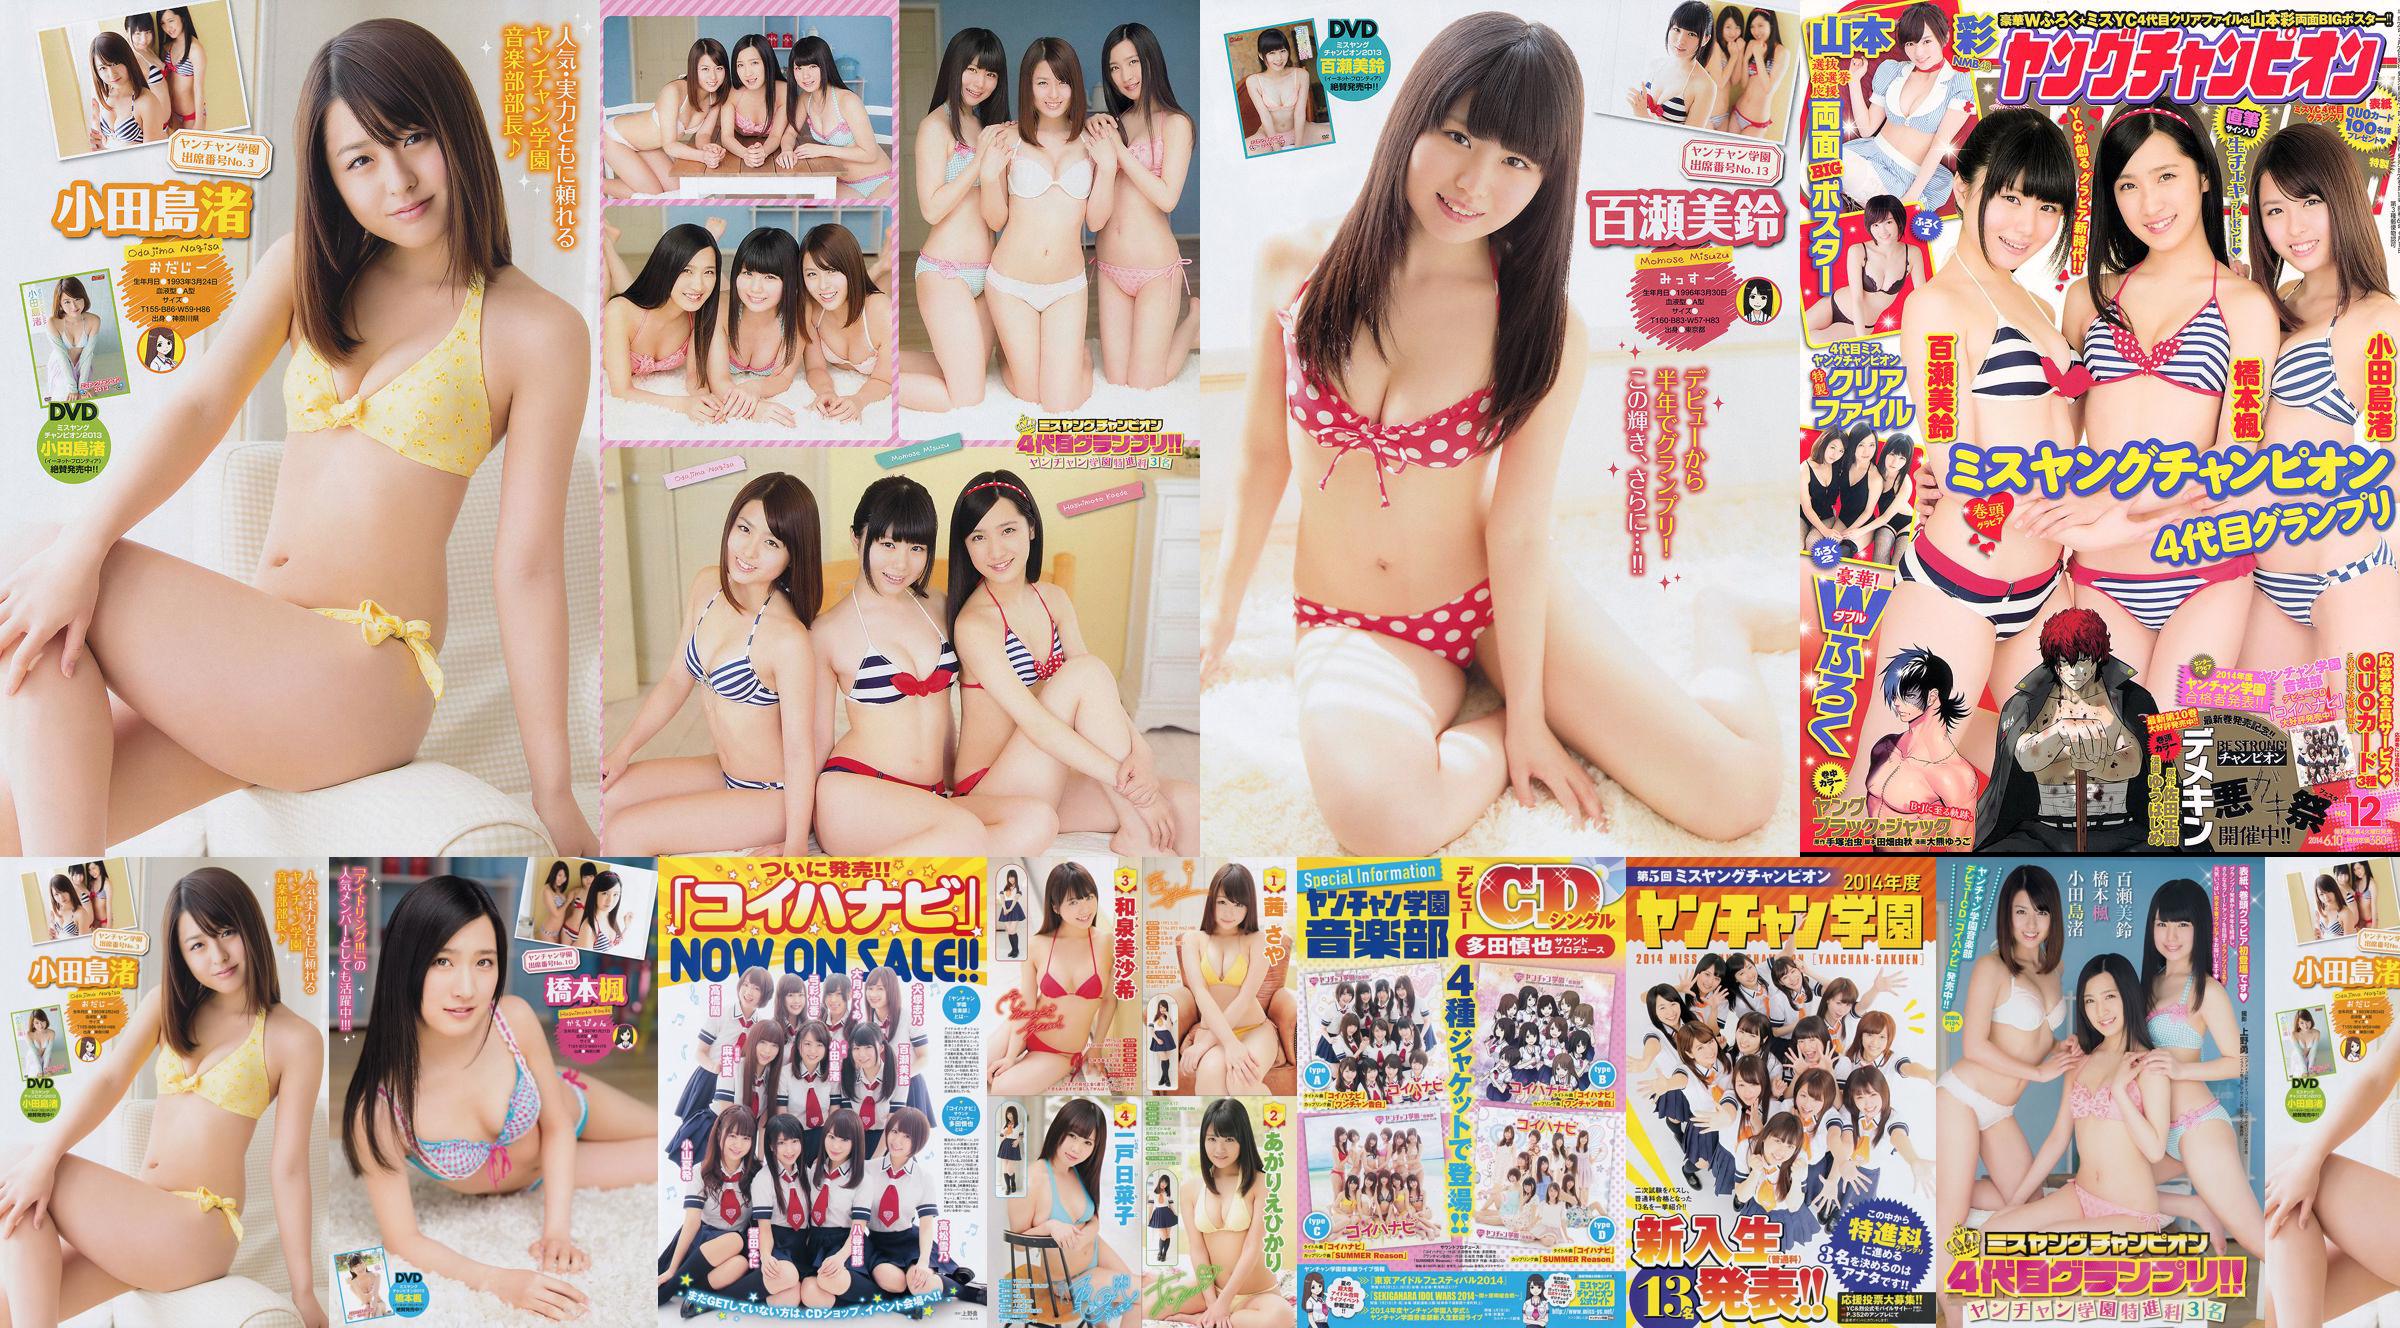 [Jeune Champion] Nagisa Odajima Kaede Hashimoto Misuzu Momose 2014 Photographie n ° 12 No.fb9c15 Page 1